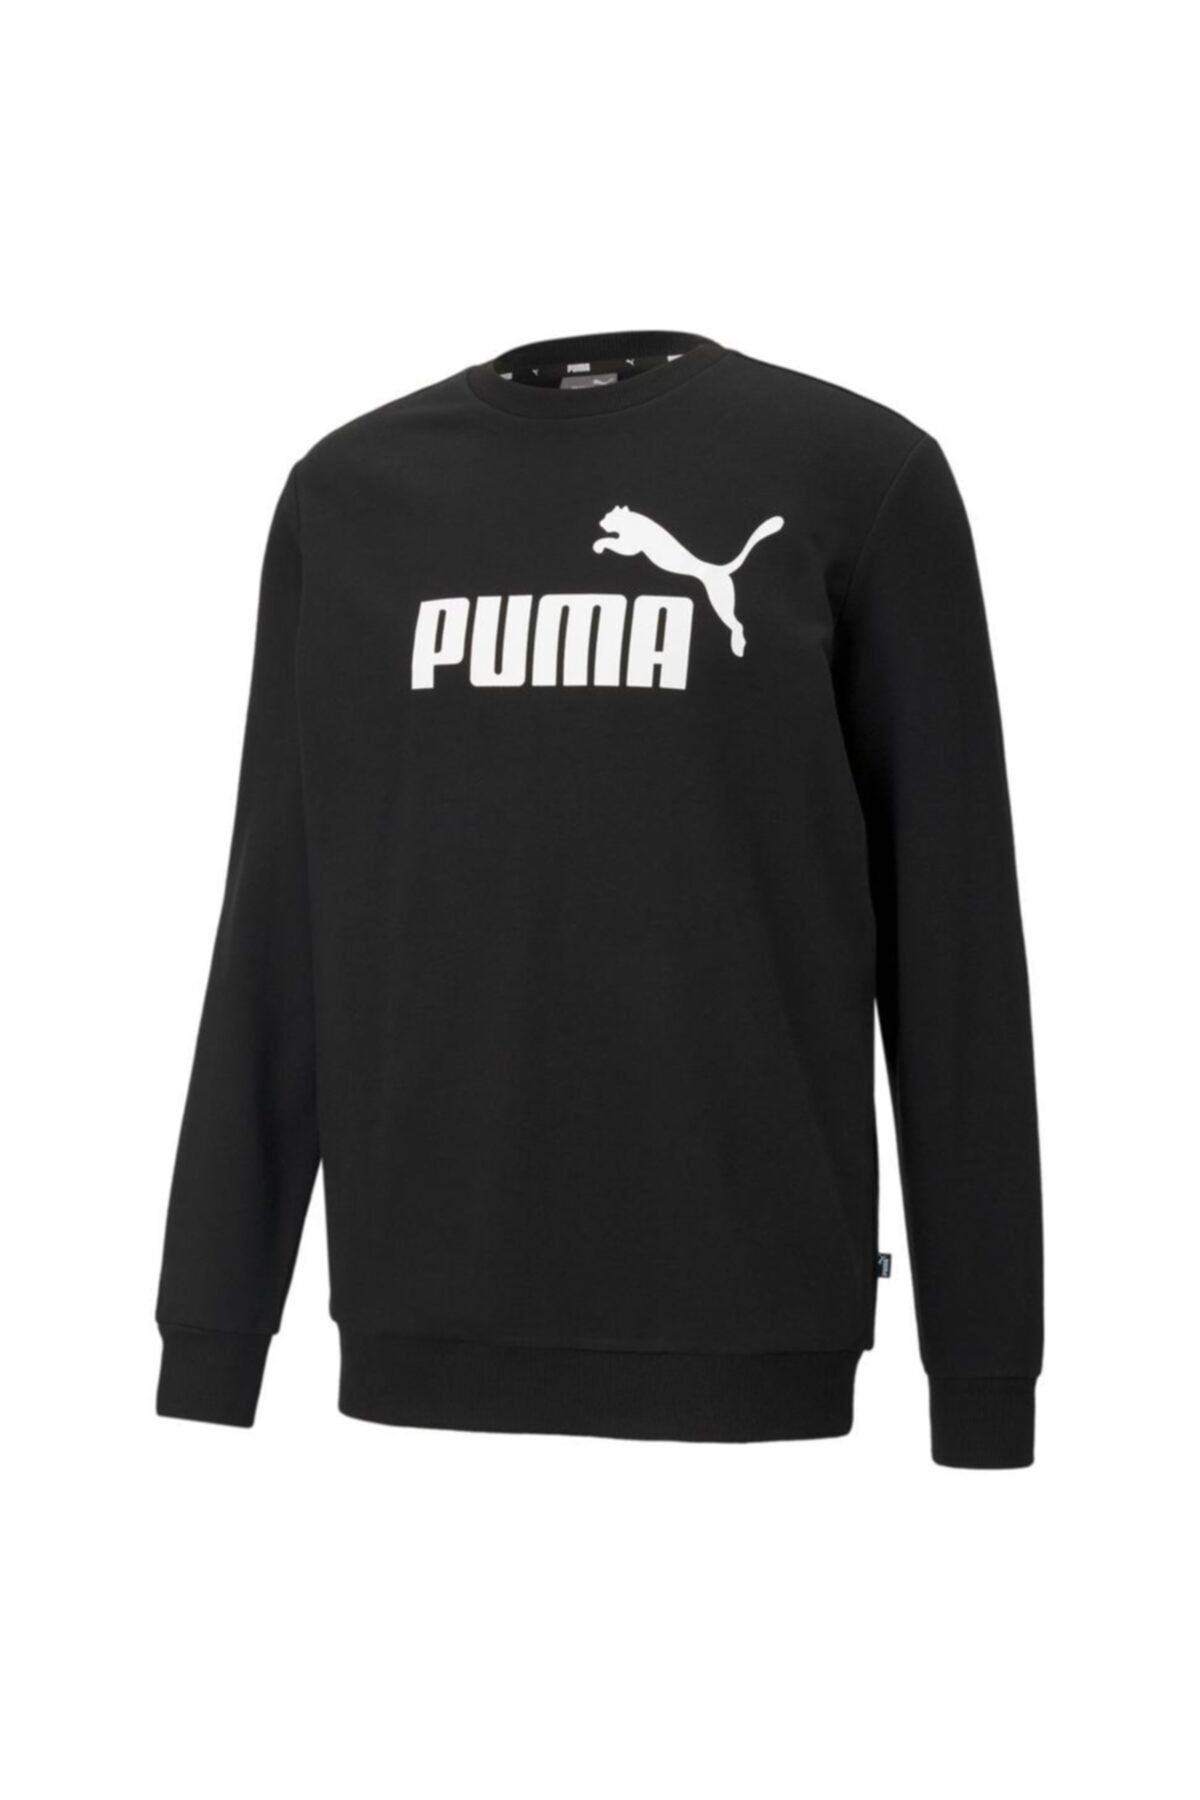 Puma Ess Big Logo Crew - Unisex Siyah Pamuklu Sweatshirt